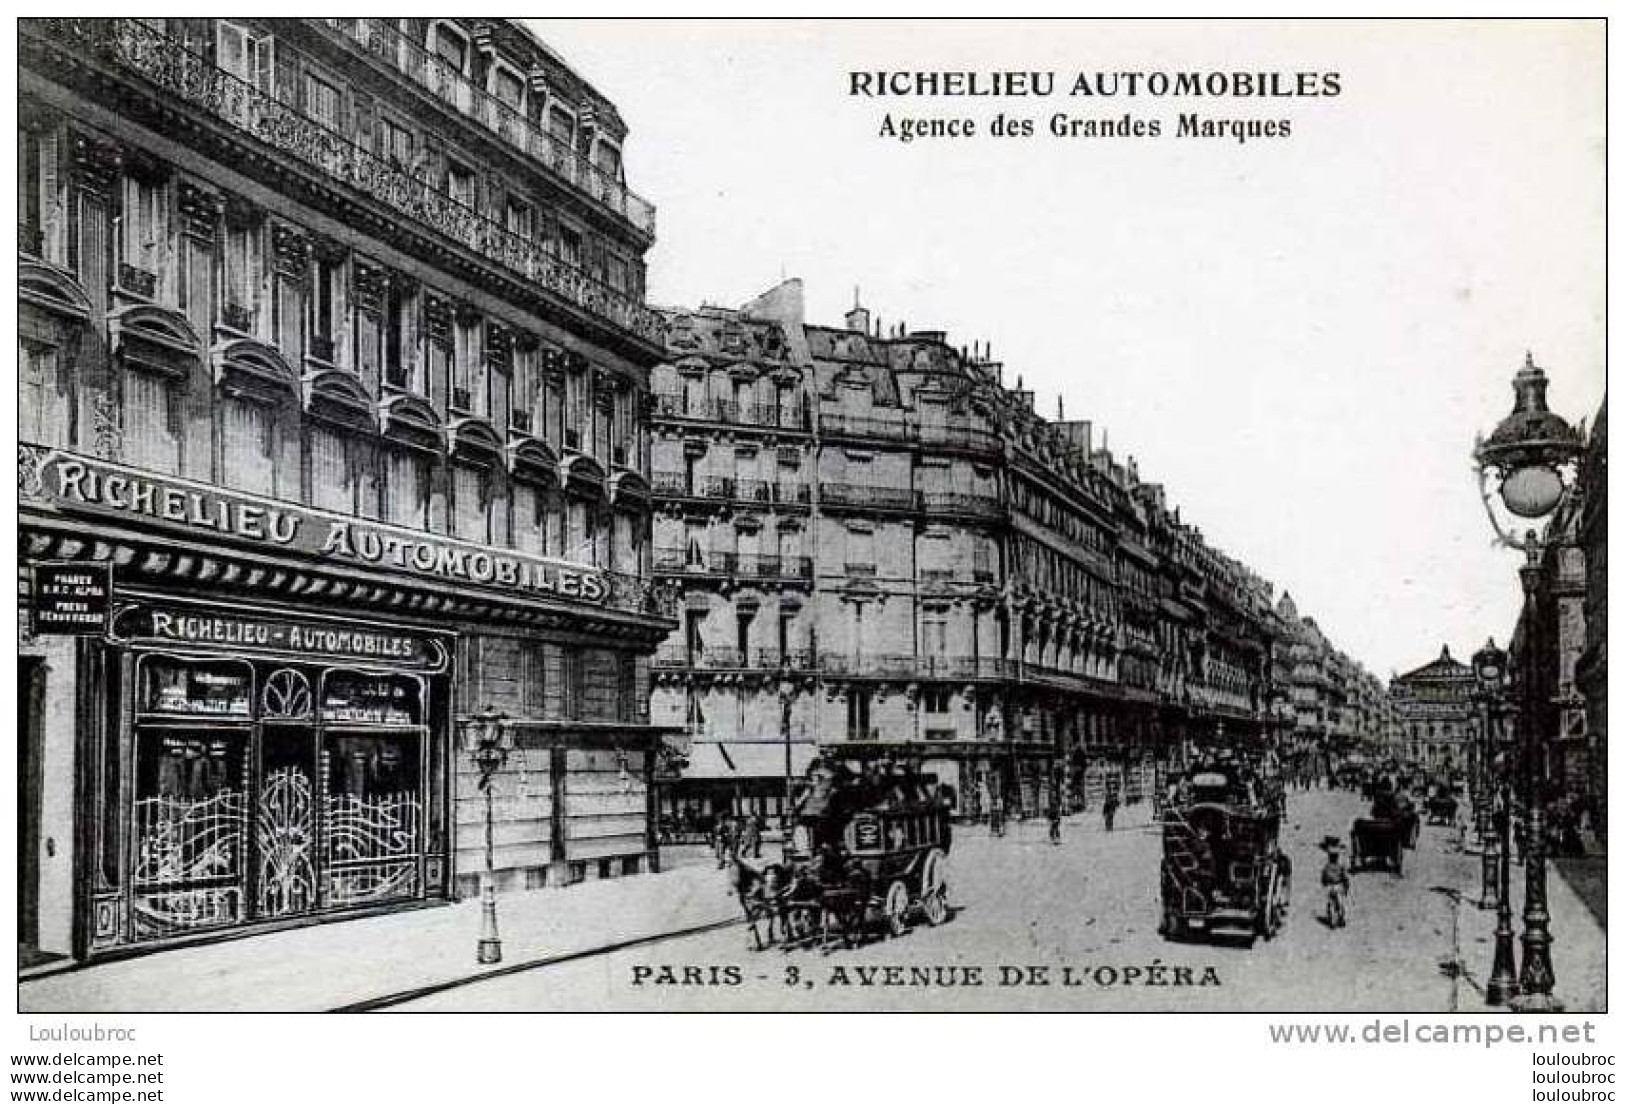 75 PARIS RICHELIEU AUTOMOBILES AGENCE DE GRANDES MARQUES 3 AVENUE DE L'OPERA - Distrito: 02